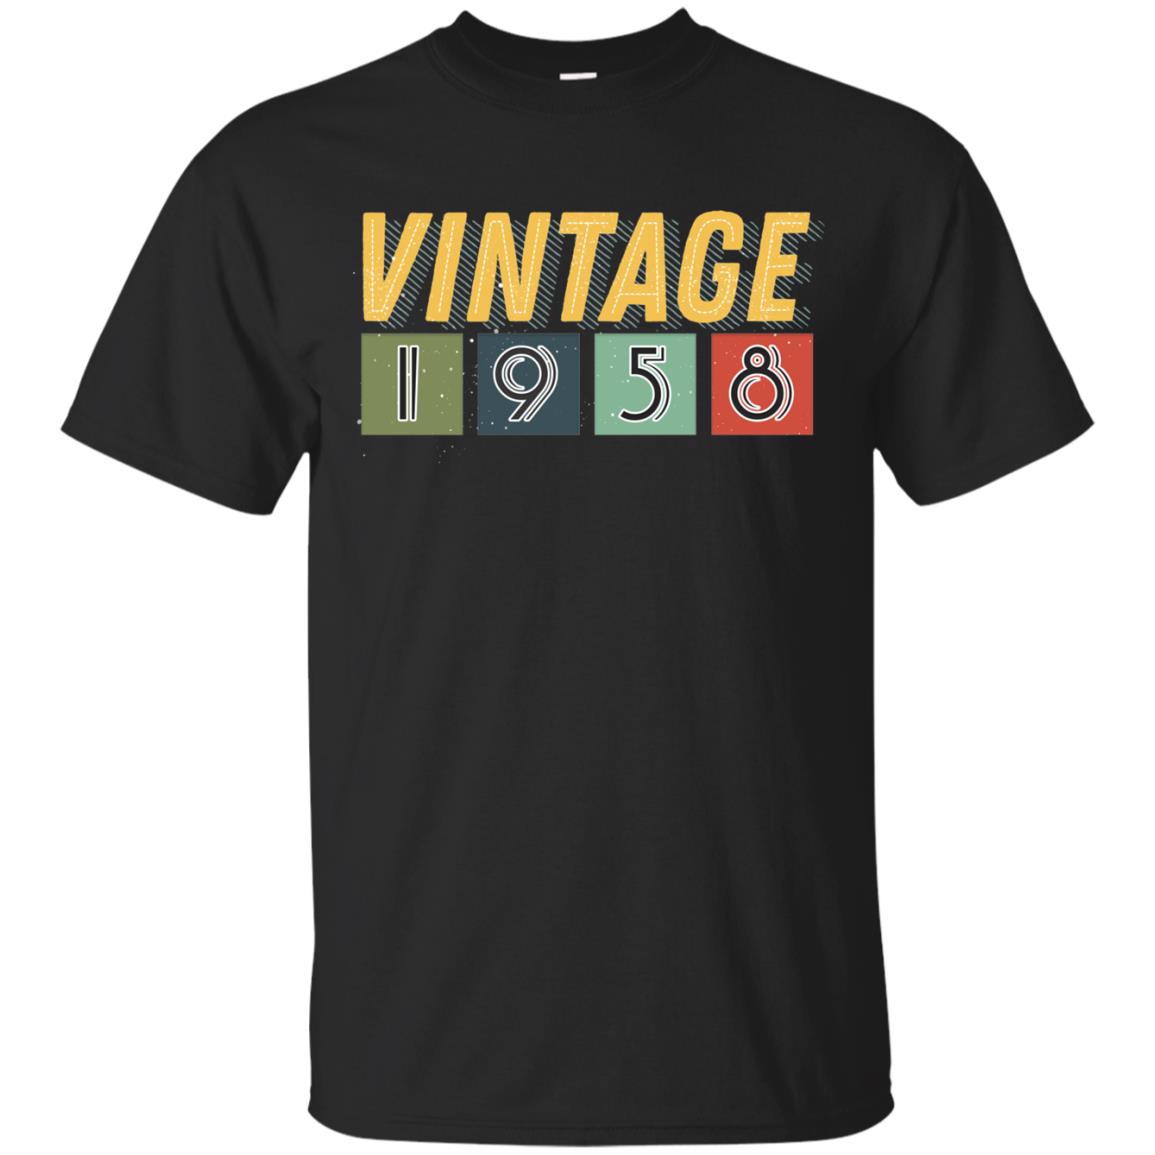 Vintage 1958 60th Birthday Gift Shirt For Mens Or WomensG200 Gildan Ultra Cotton T-Shirt